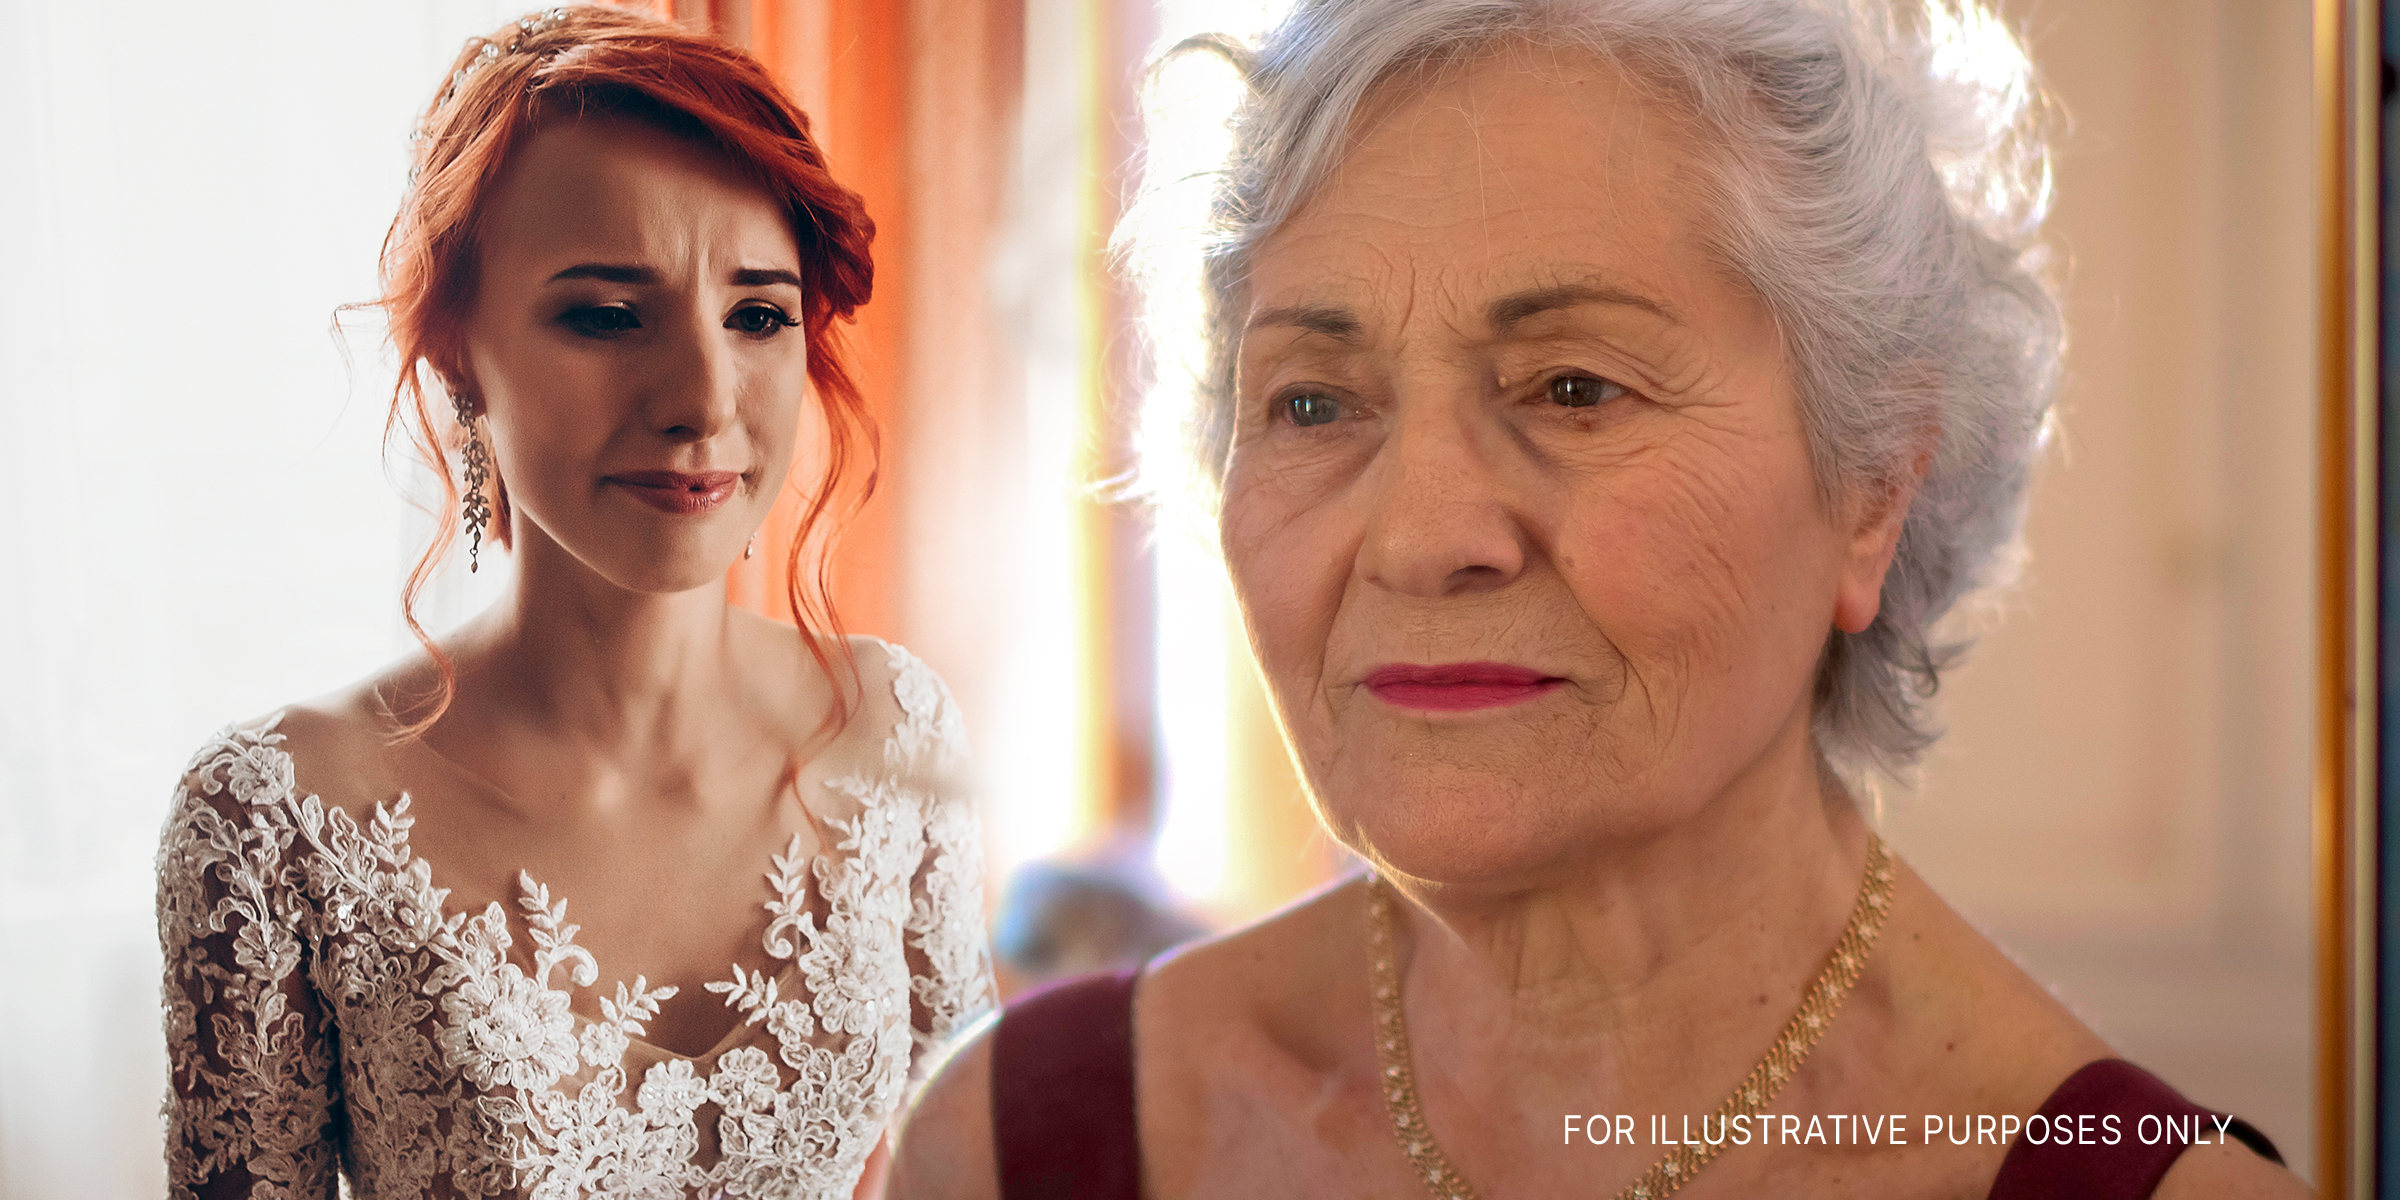 A crying bride | An elderly woman | Source: Shutterstock